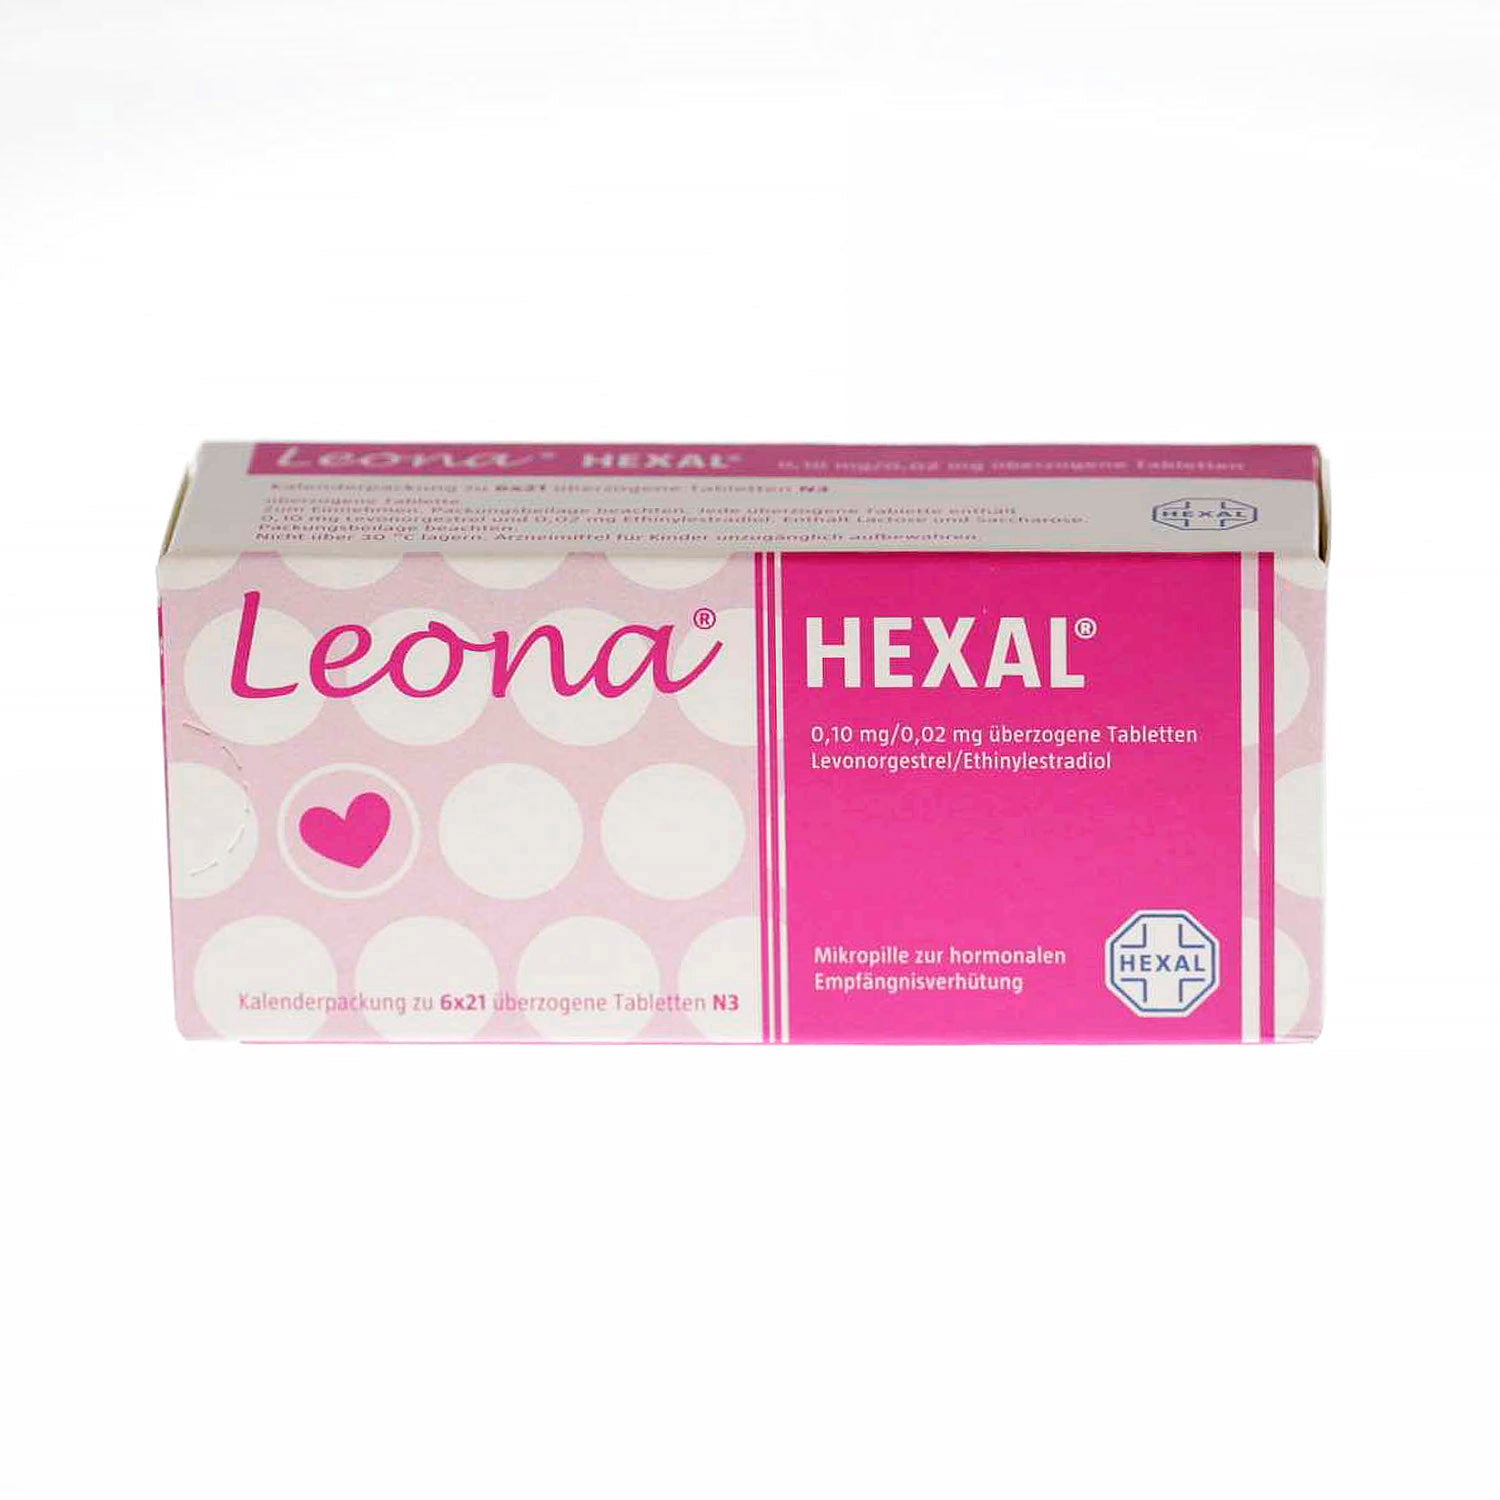 Leona-Hexal 0.10mg/0.02mg